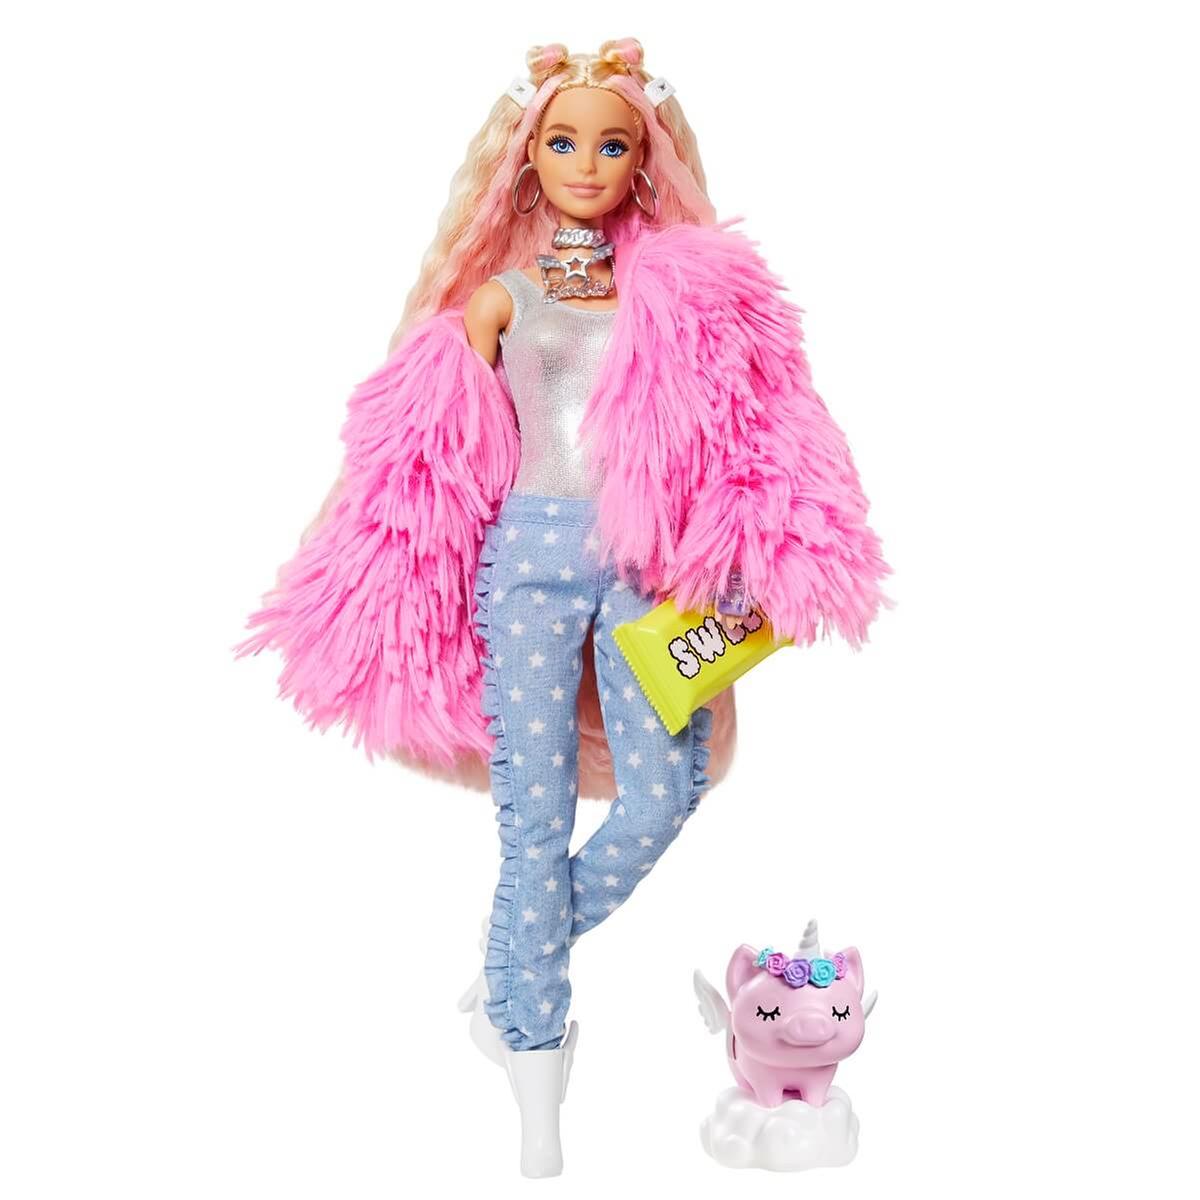 Barbie - Muñeca Extra - Pelo rubio y rosado | Barbie Fashionista |  Toys"R"Us España